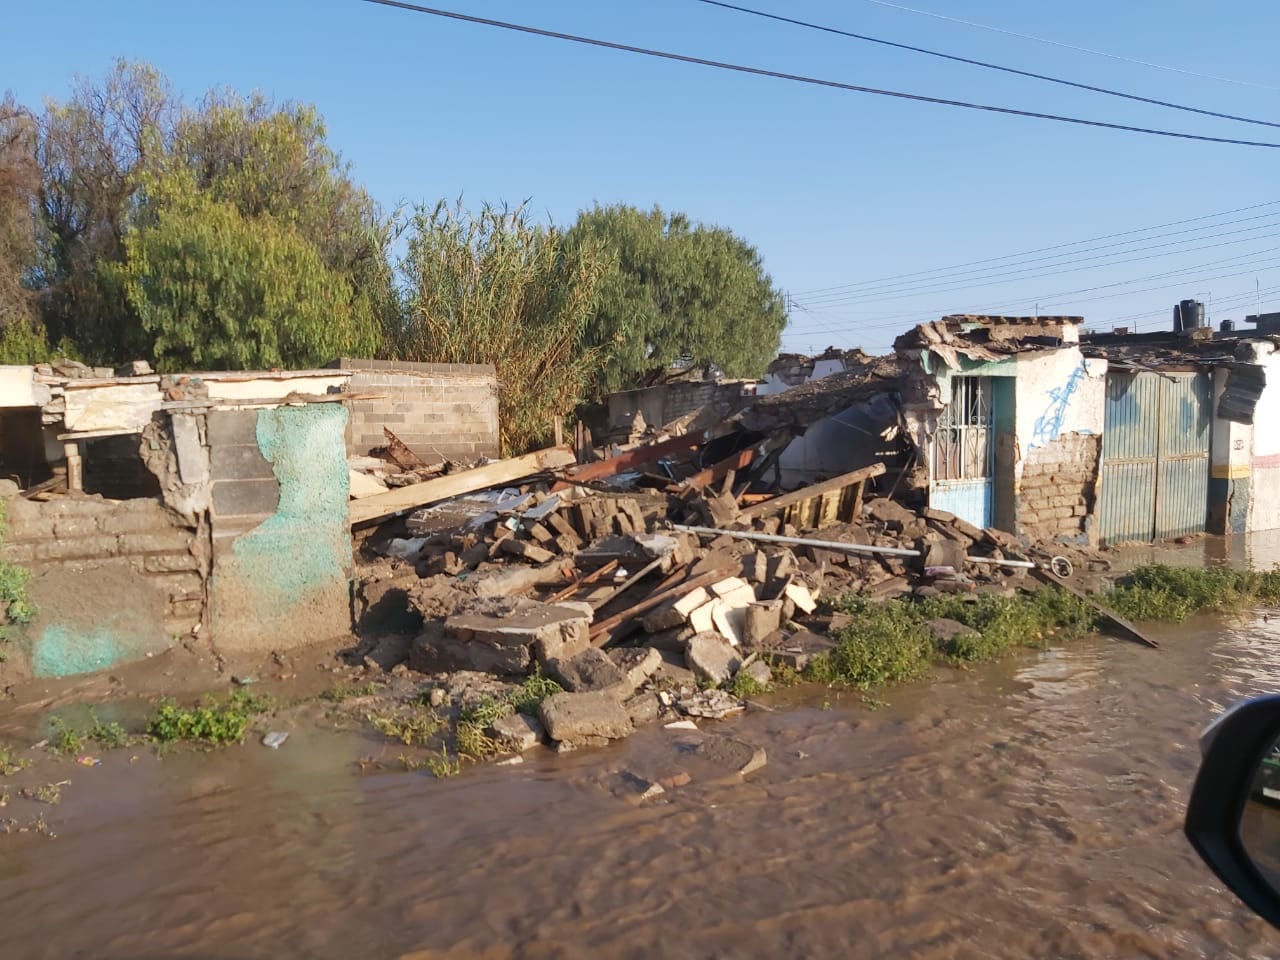  Viviendas destruidas por lluvias torrenciales en Salinas, asentadas ilegalmente